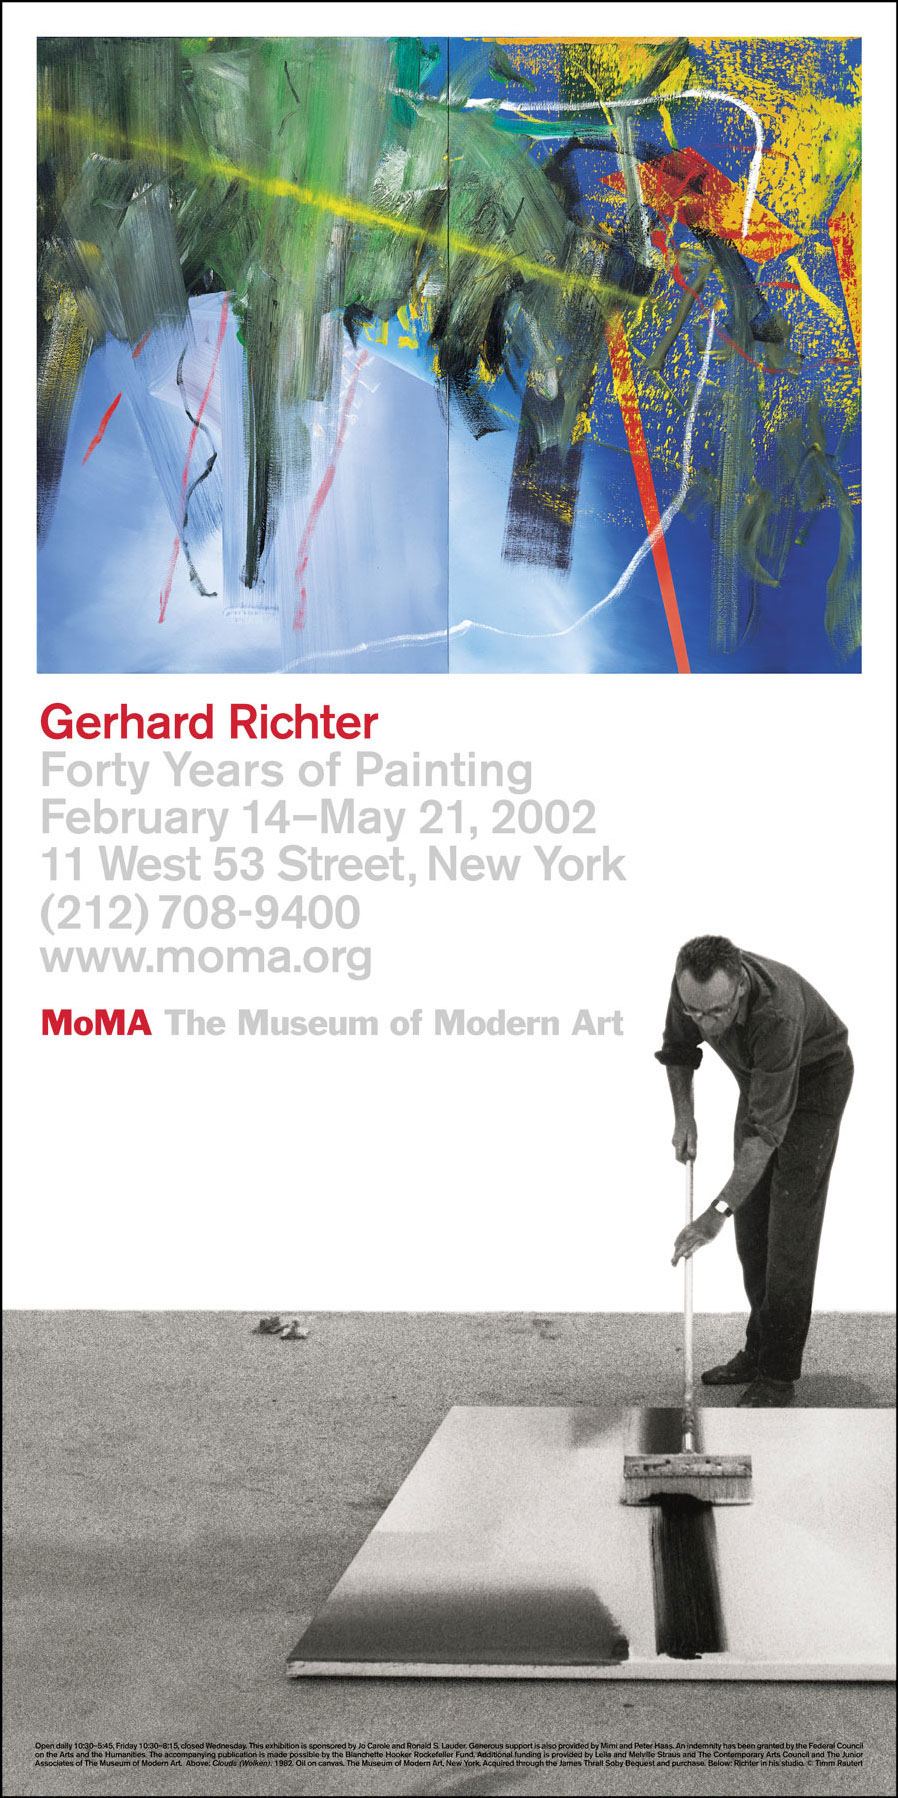 Gerhard Richter at MoMA on Behance